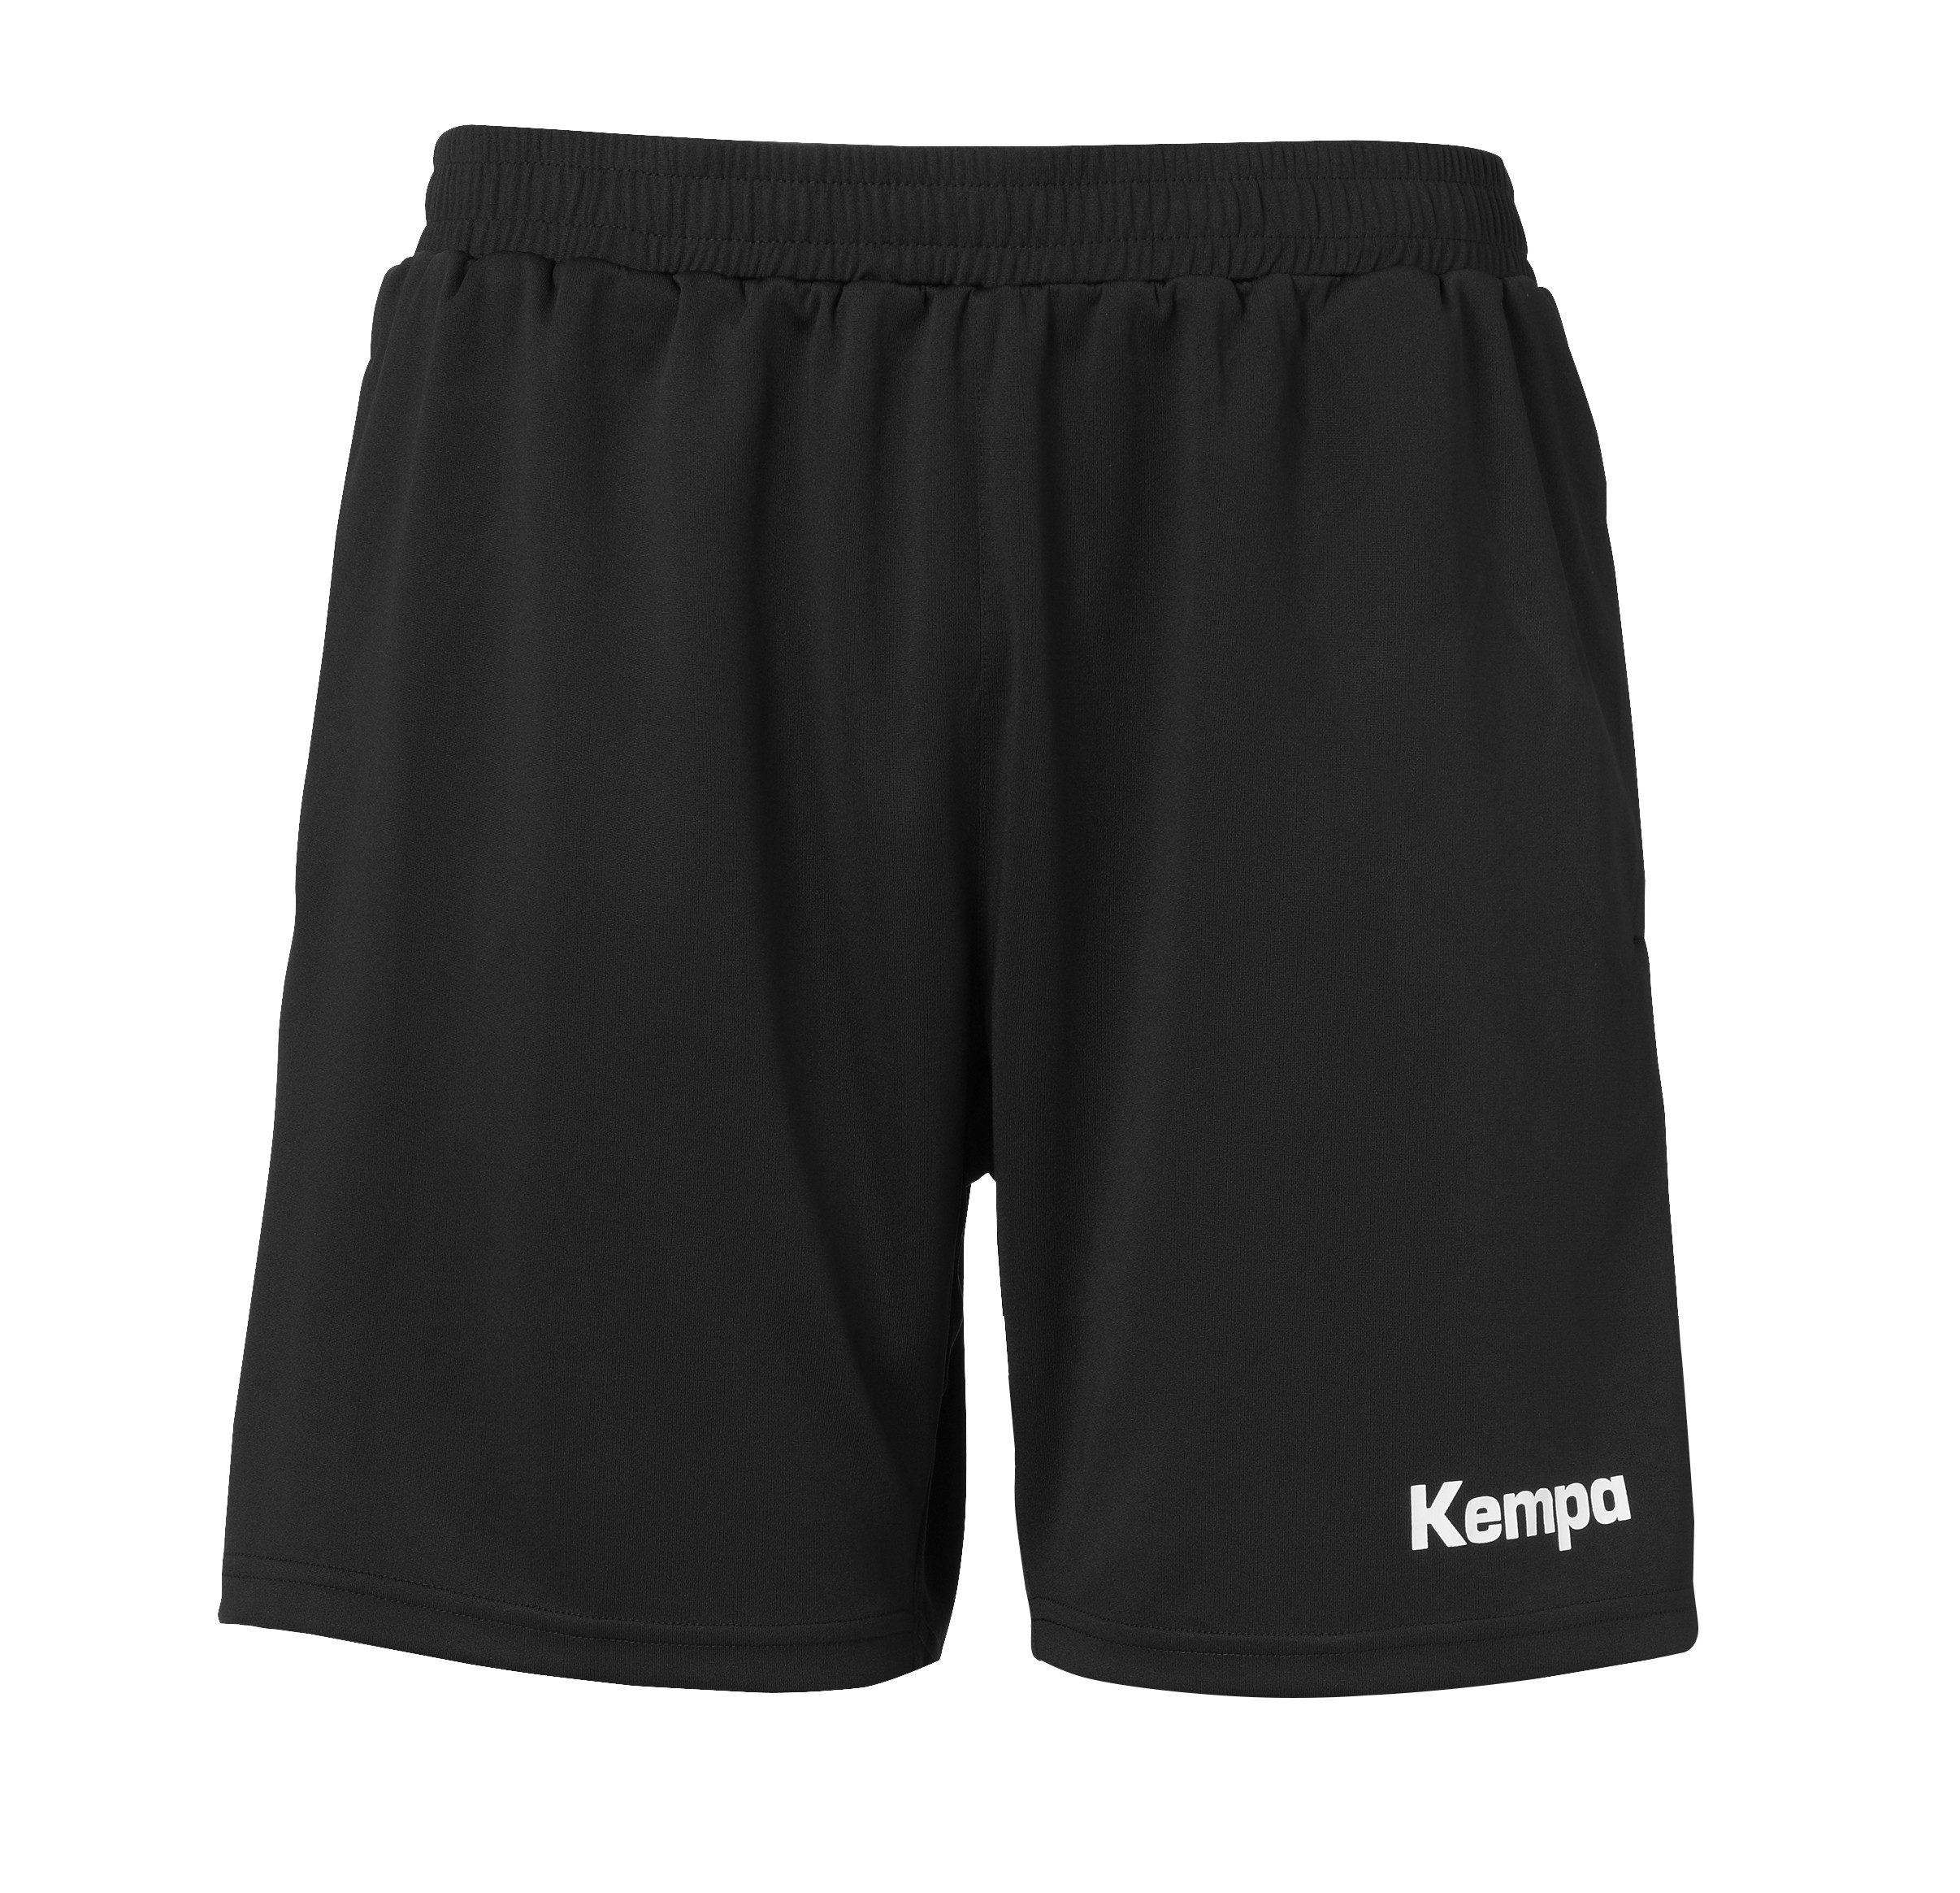 Kempa Trainingshose Pocket Shorts